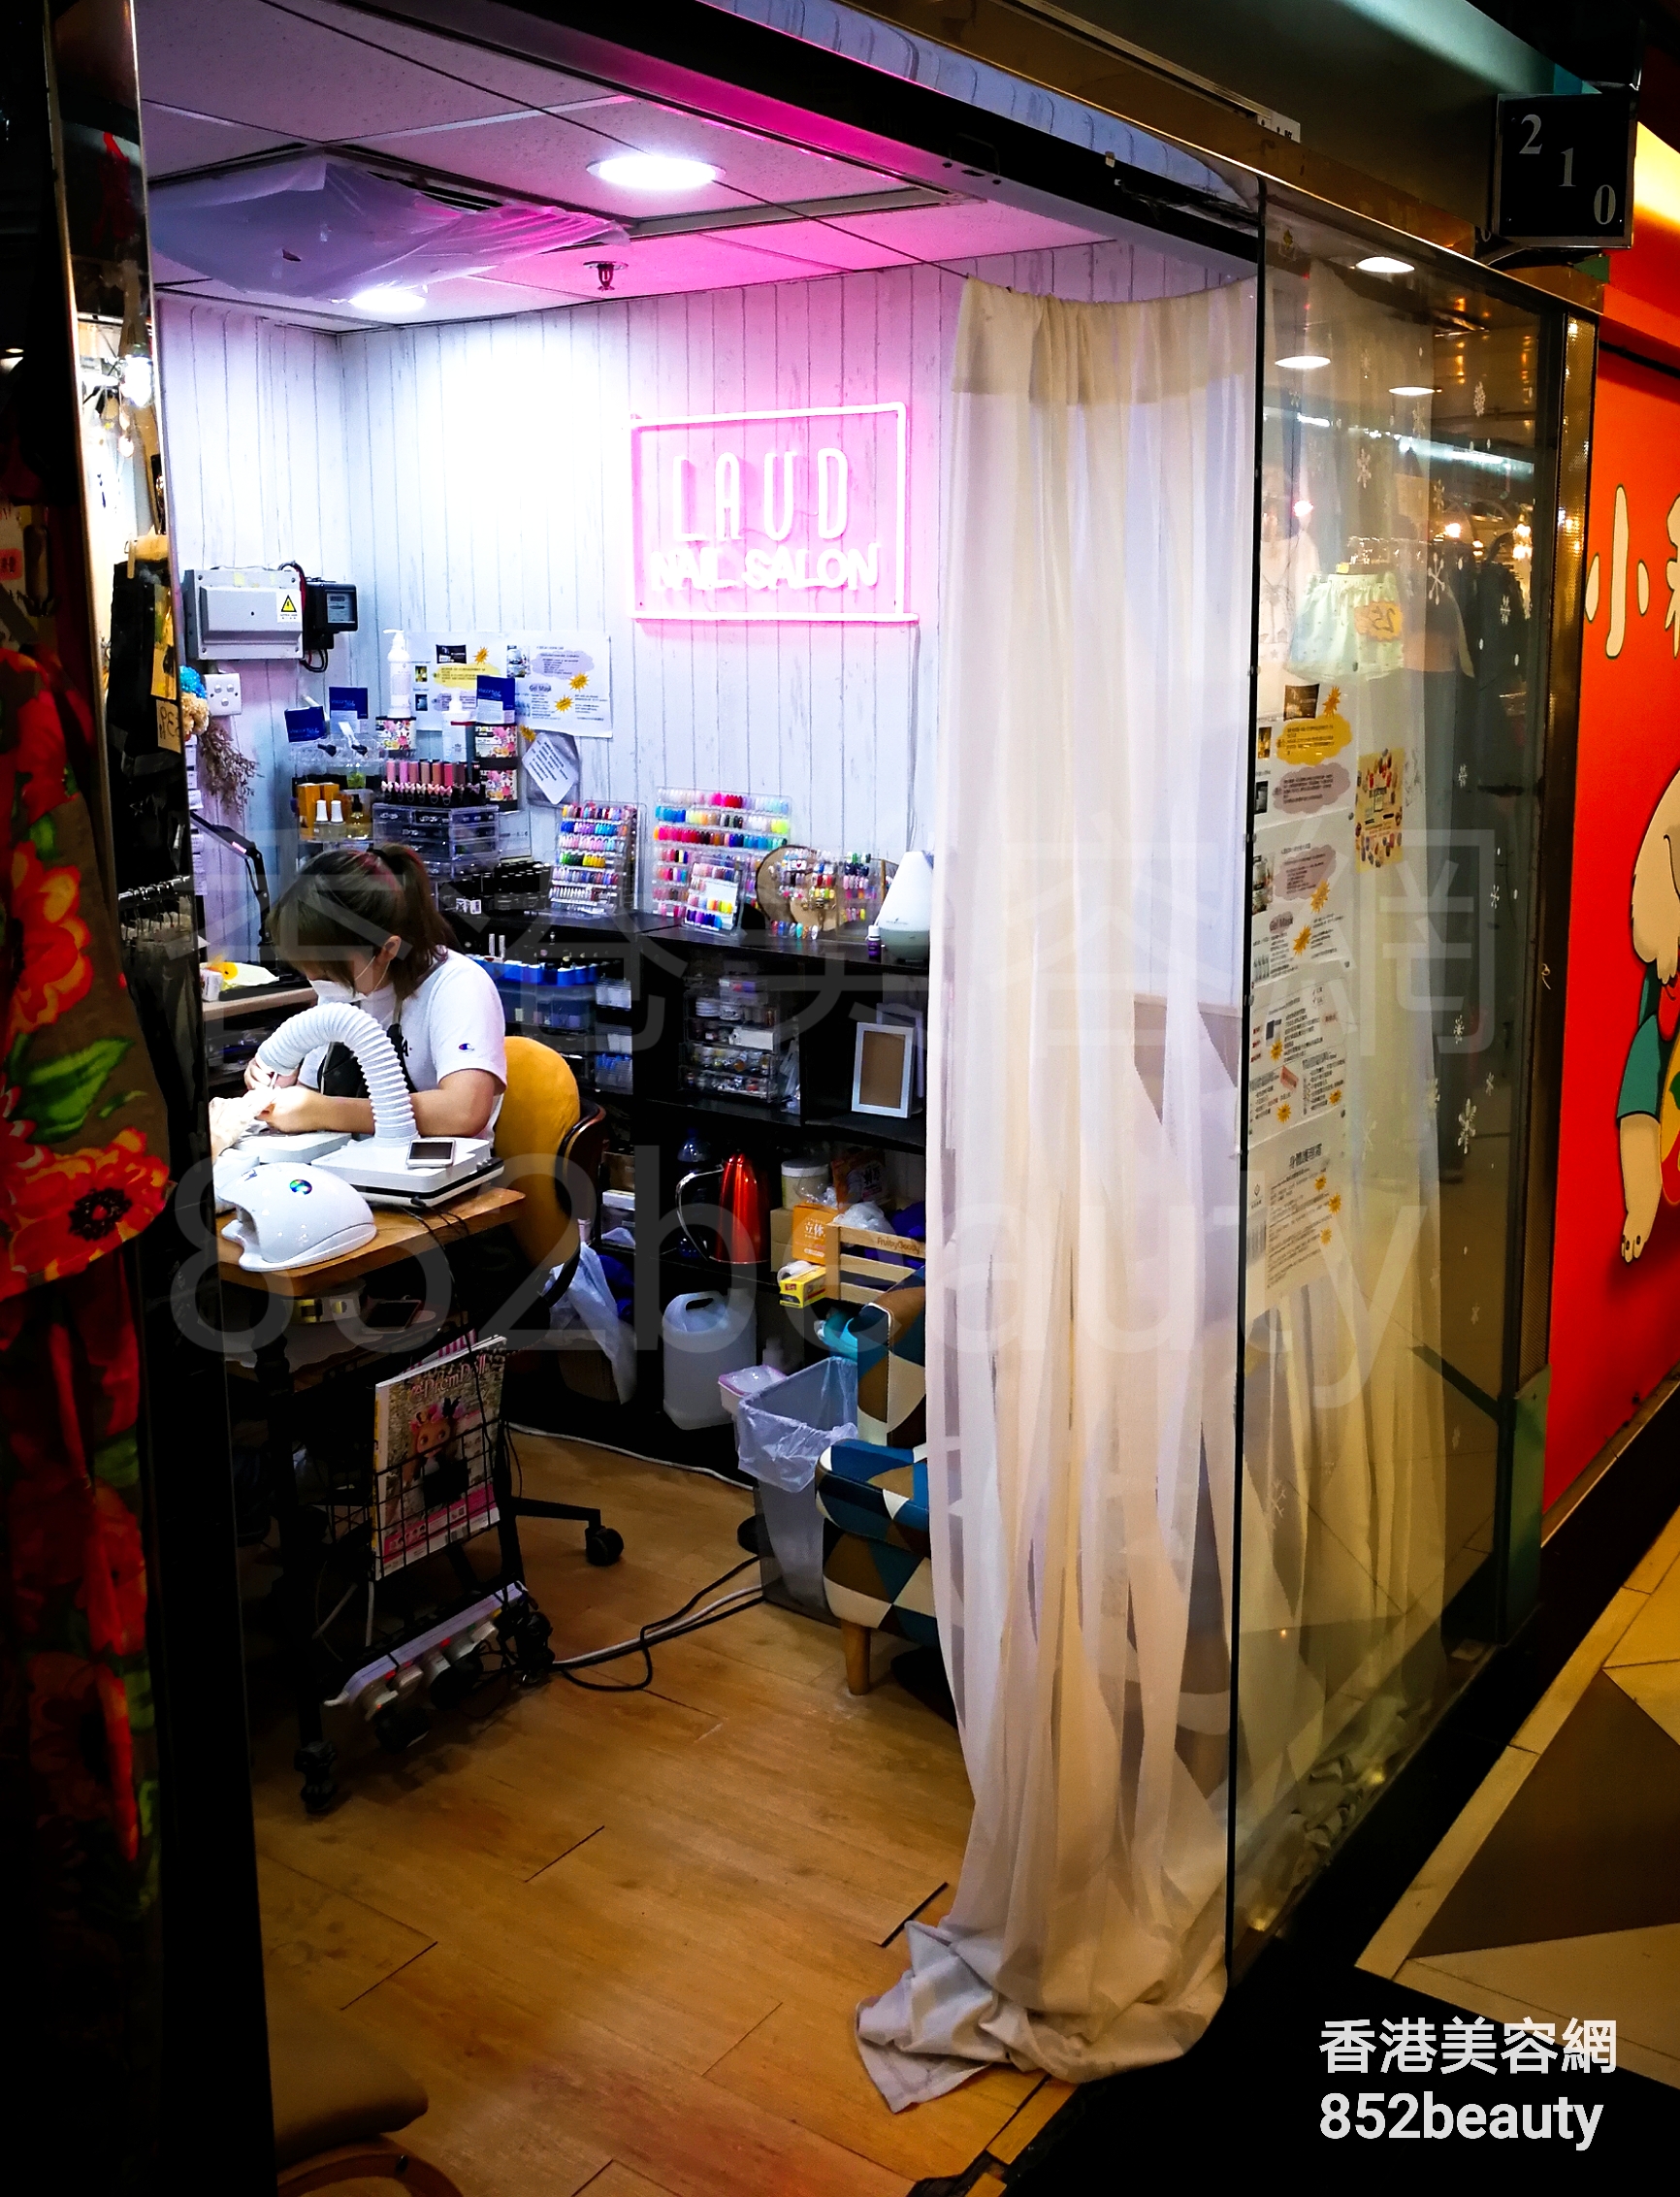 香港美容網 Hong Kong Beauty Salon 美容院 / 美容師: LaUd Nail Salon